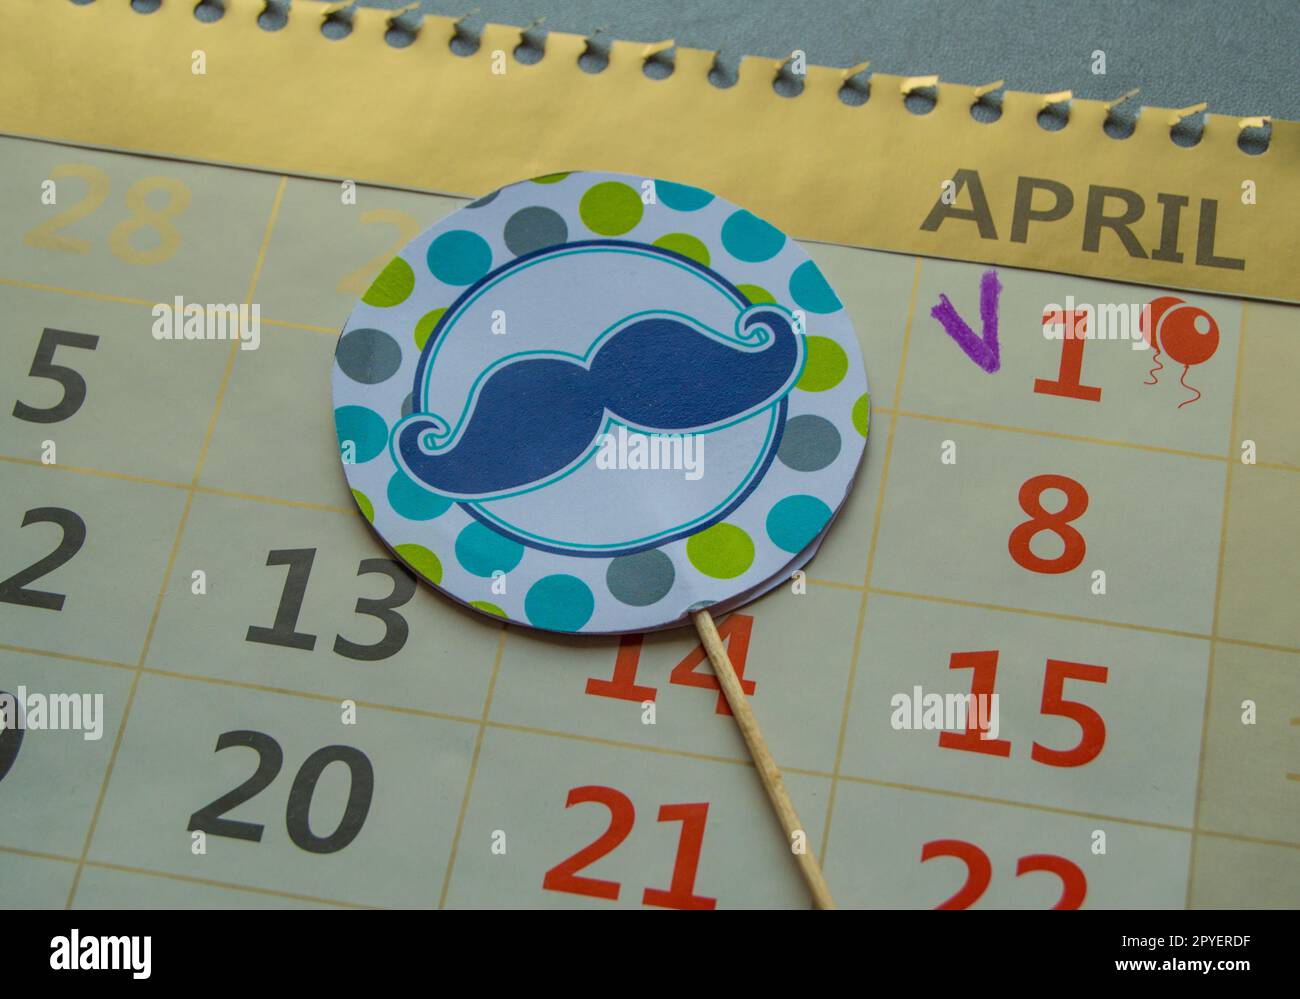 Kalender 1. April - Narrentag im April, Lachen, Witze, Schnurrbart Stockfoto